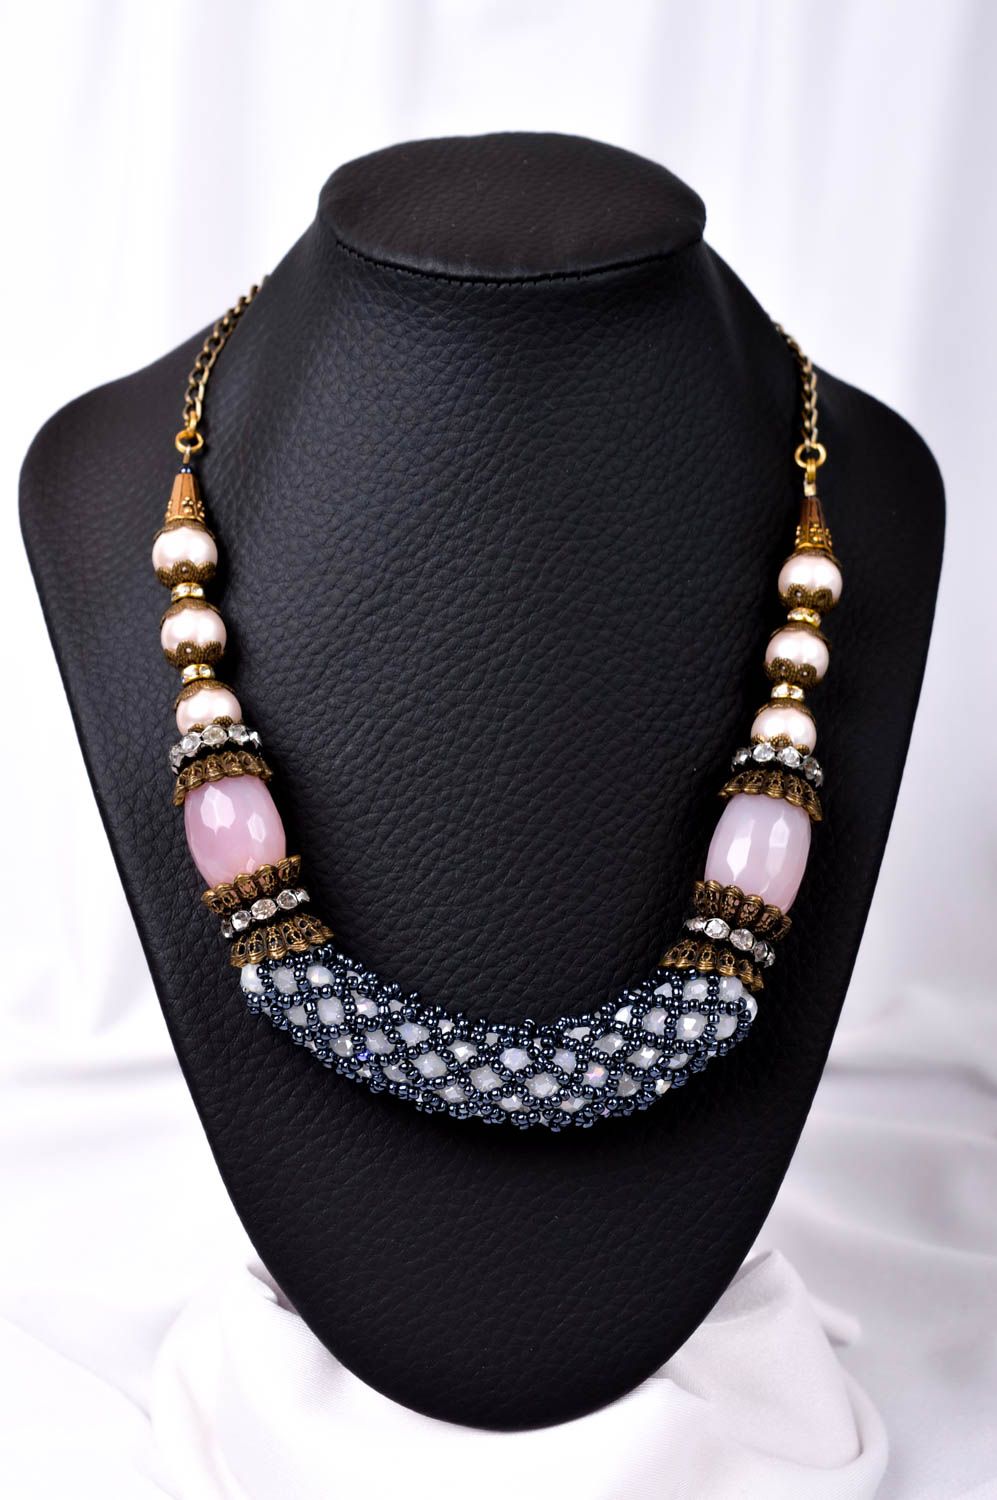 Handmade necklace designer ncklace with stone designer jewelry unusual accessory photo 1